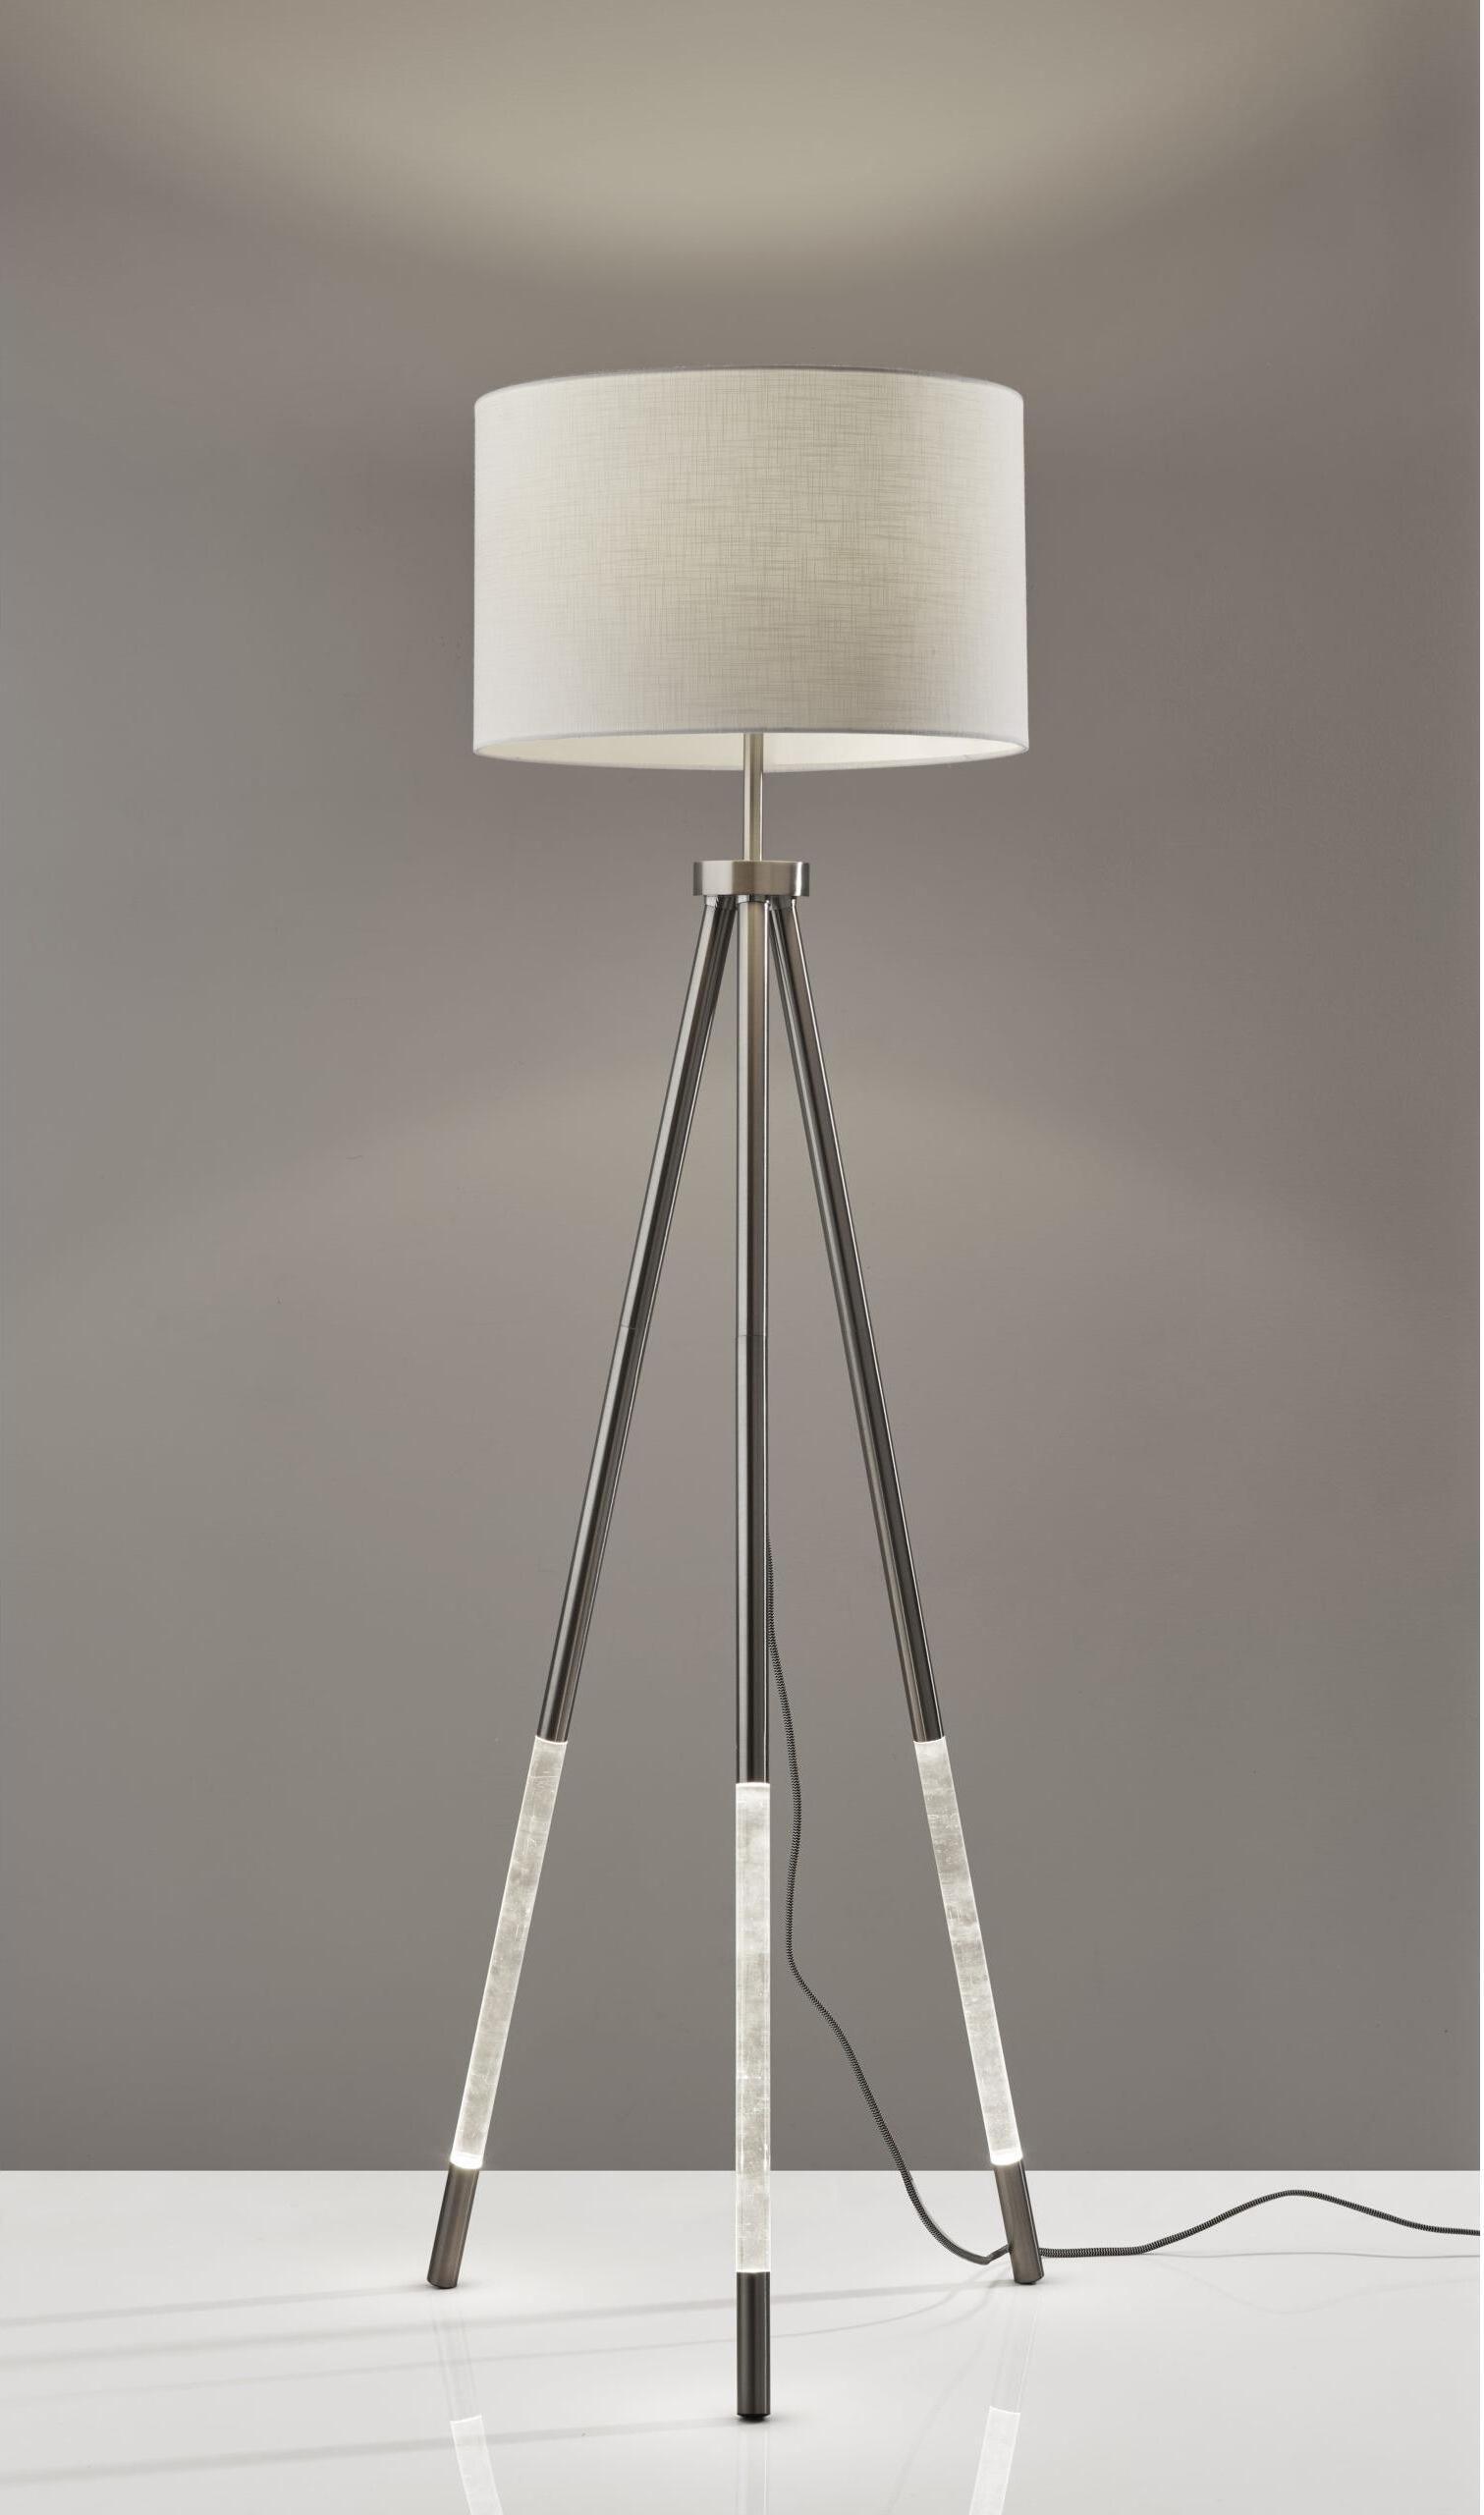 Adesso Floor Lamps - Della Night light Floor Lamp Brushed Steel